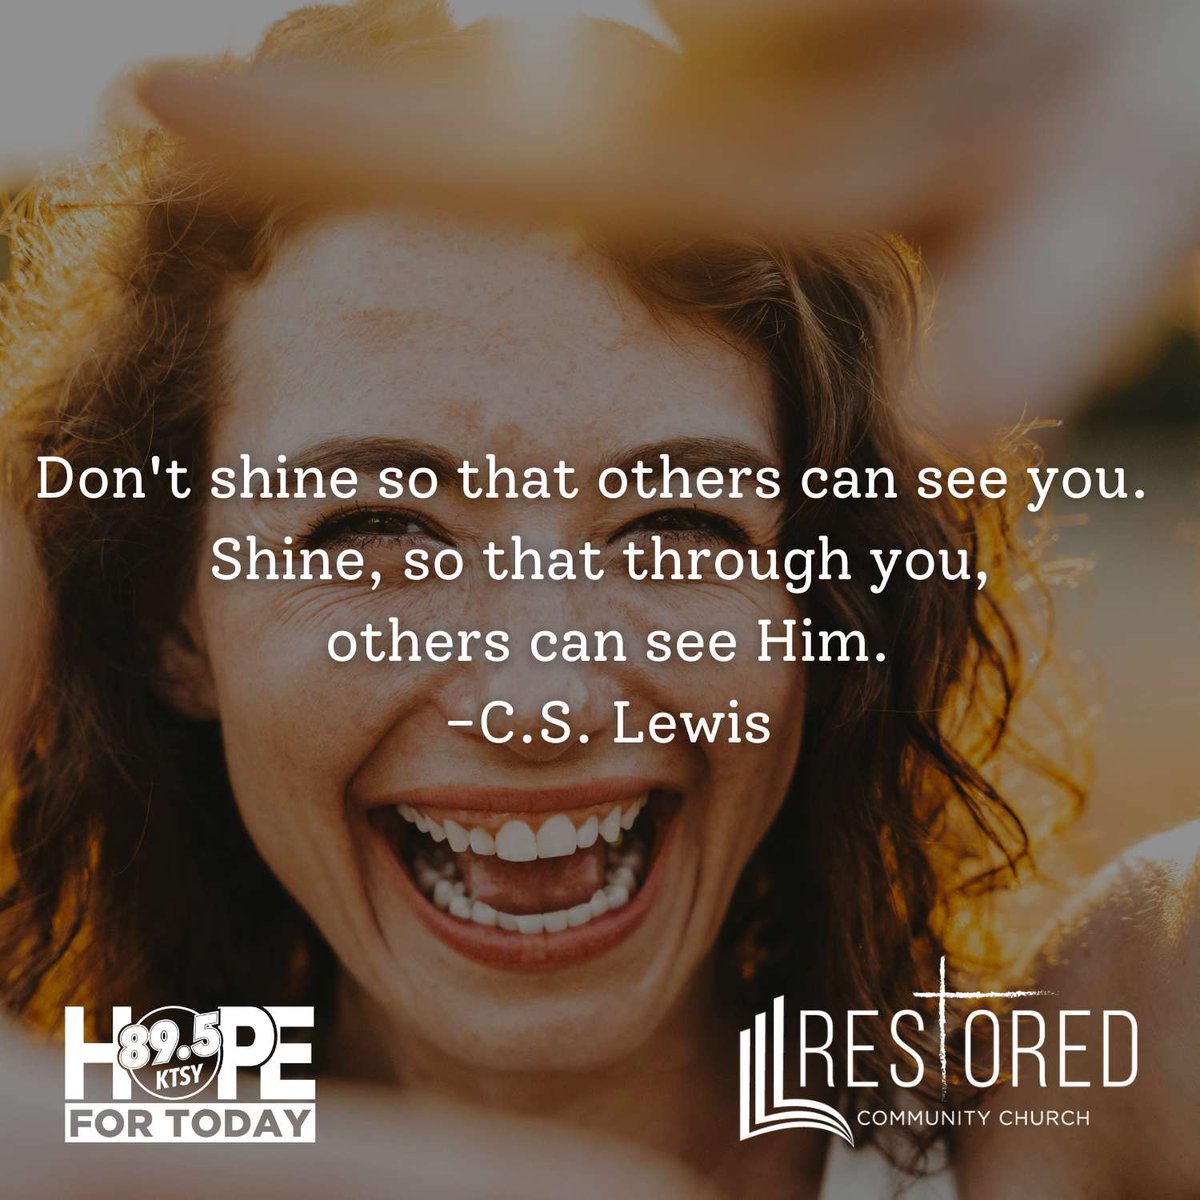 Let Jesus shine through you today. #hopefortoday #choosehope #bible #scripture